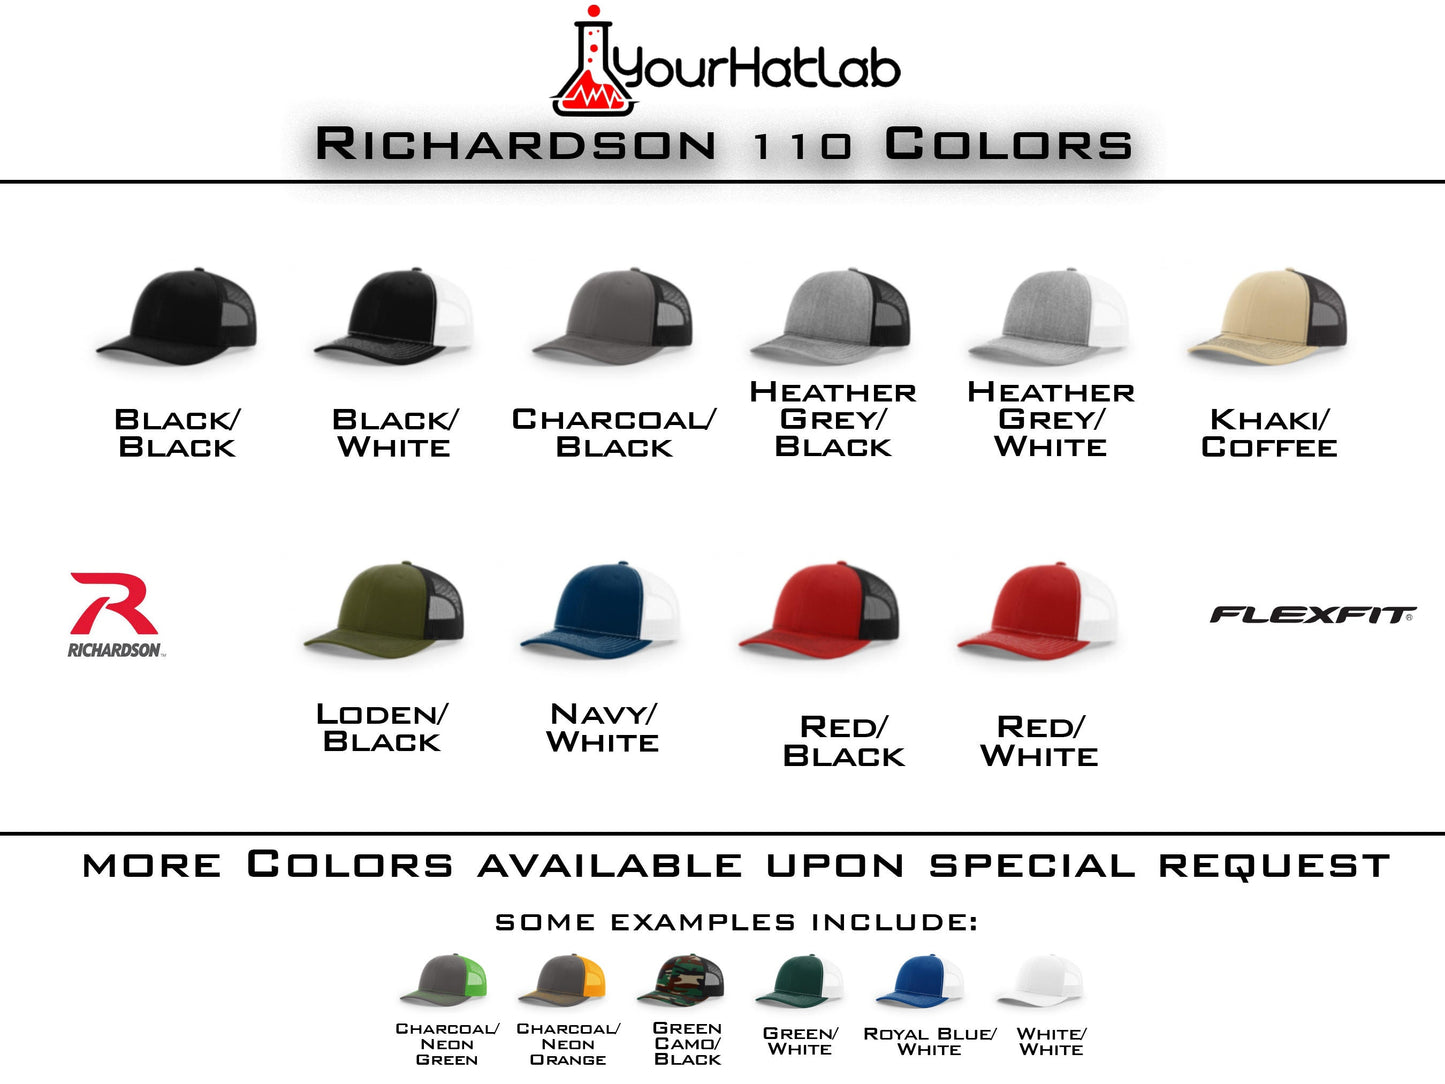 EMT R-FLEX Richardson 110 Stretch Hat